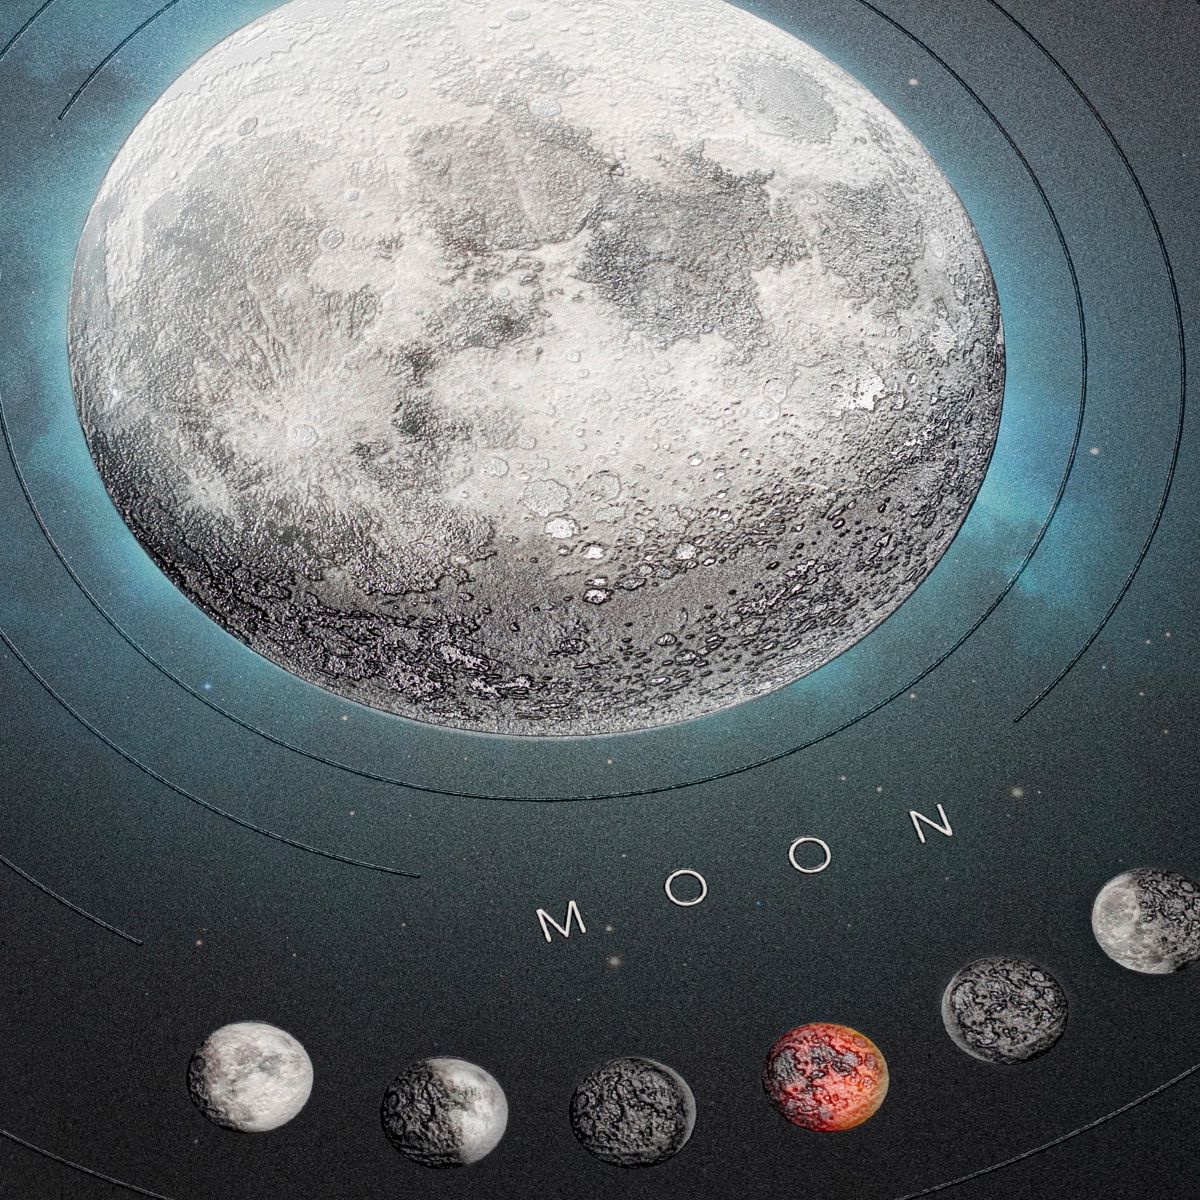 Destination: Moon Poster Print